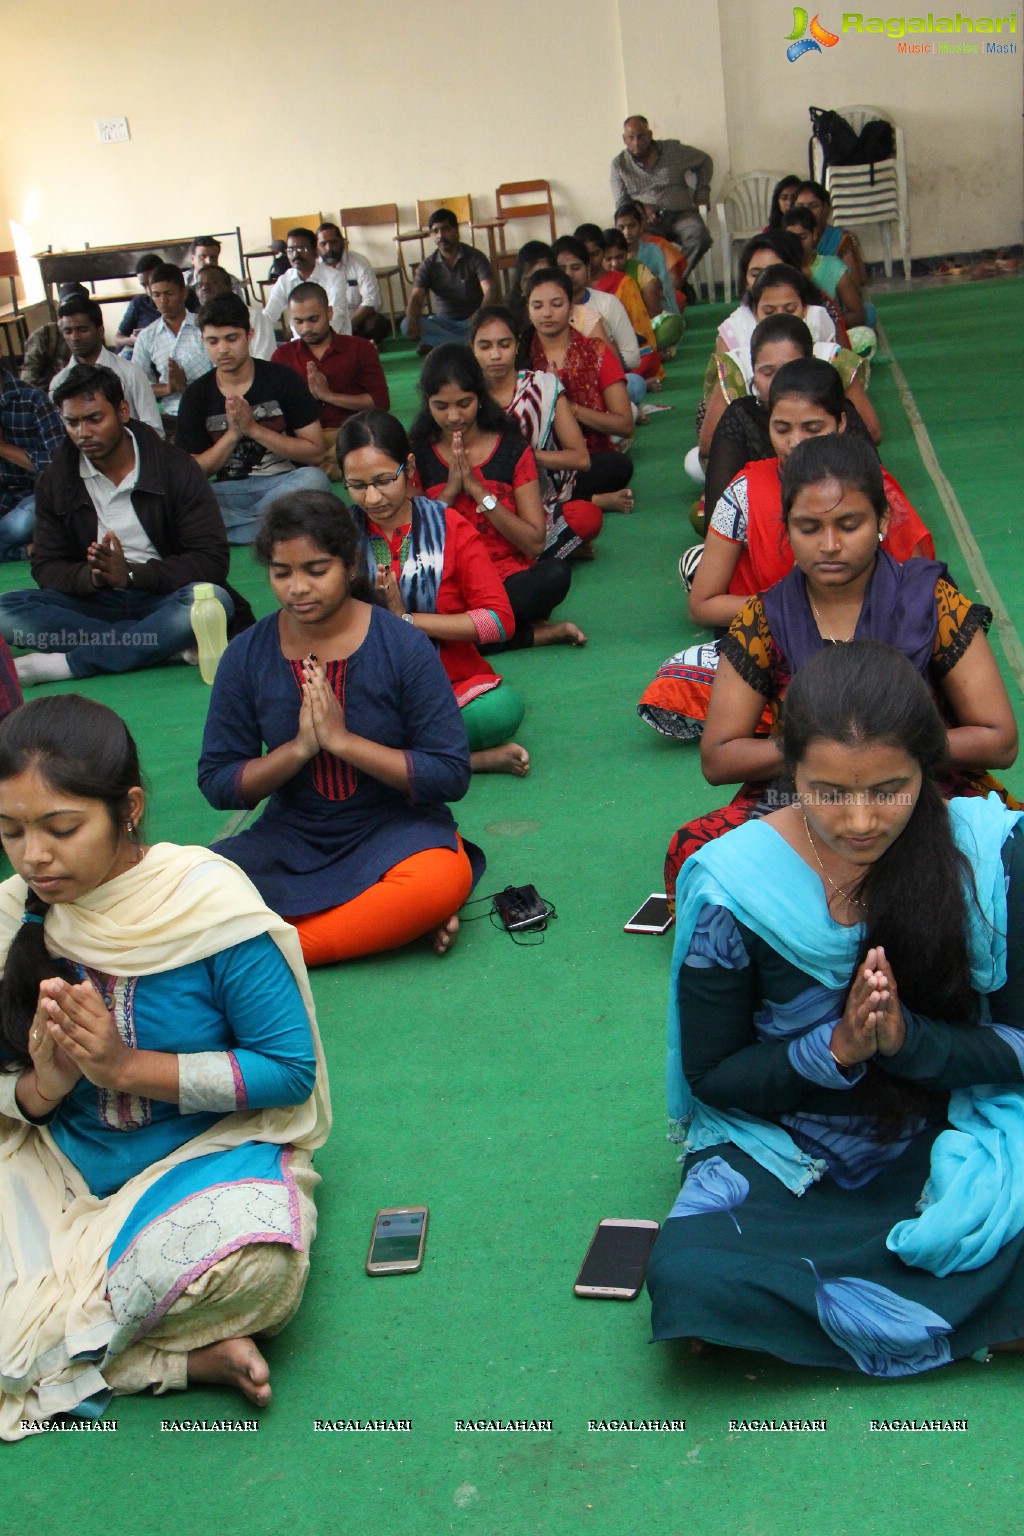 Yoga Guru Mansi Gulati's Yoga Program 'Self Transofrmation with Yoga' at Nizam College, Hyderabad